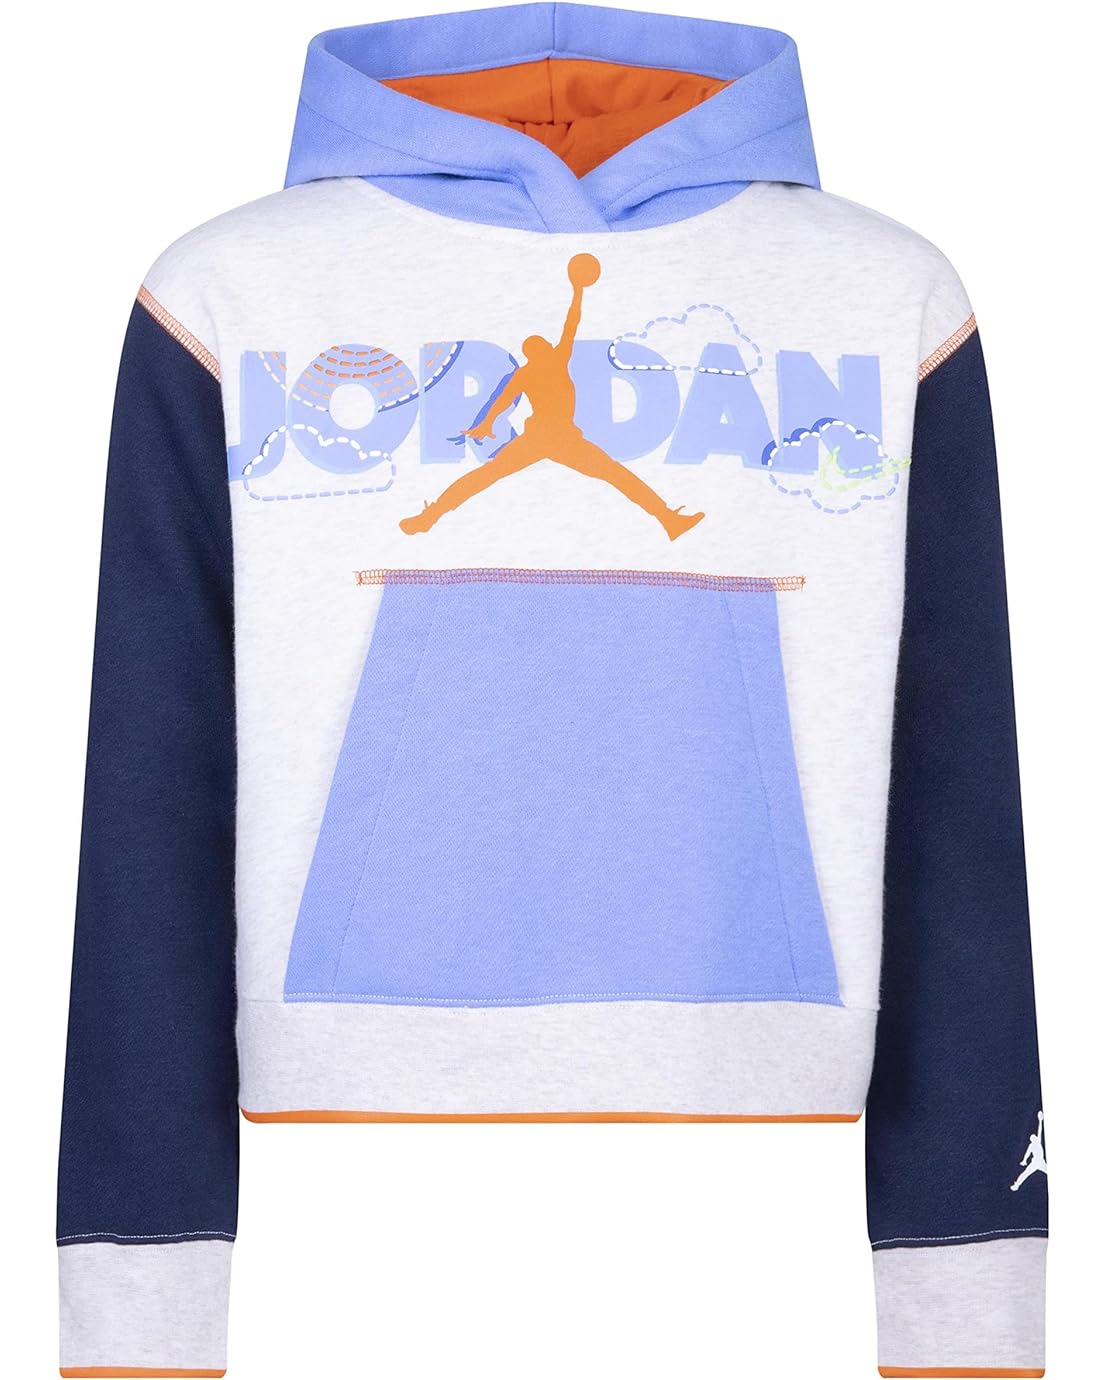  Jordan Kids Backyard Adventure Boxy Sweatshirt (Little Kids/Big Kids)